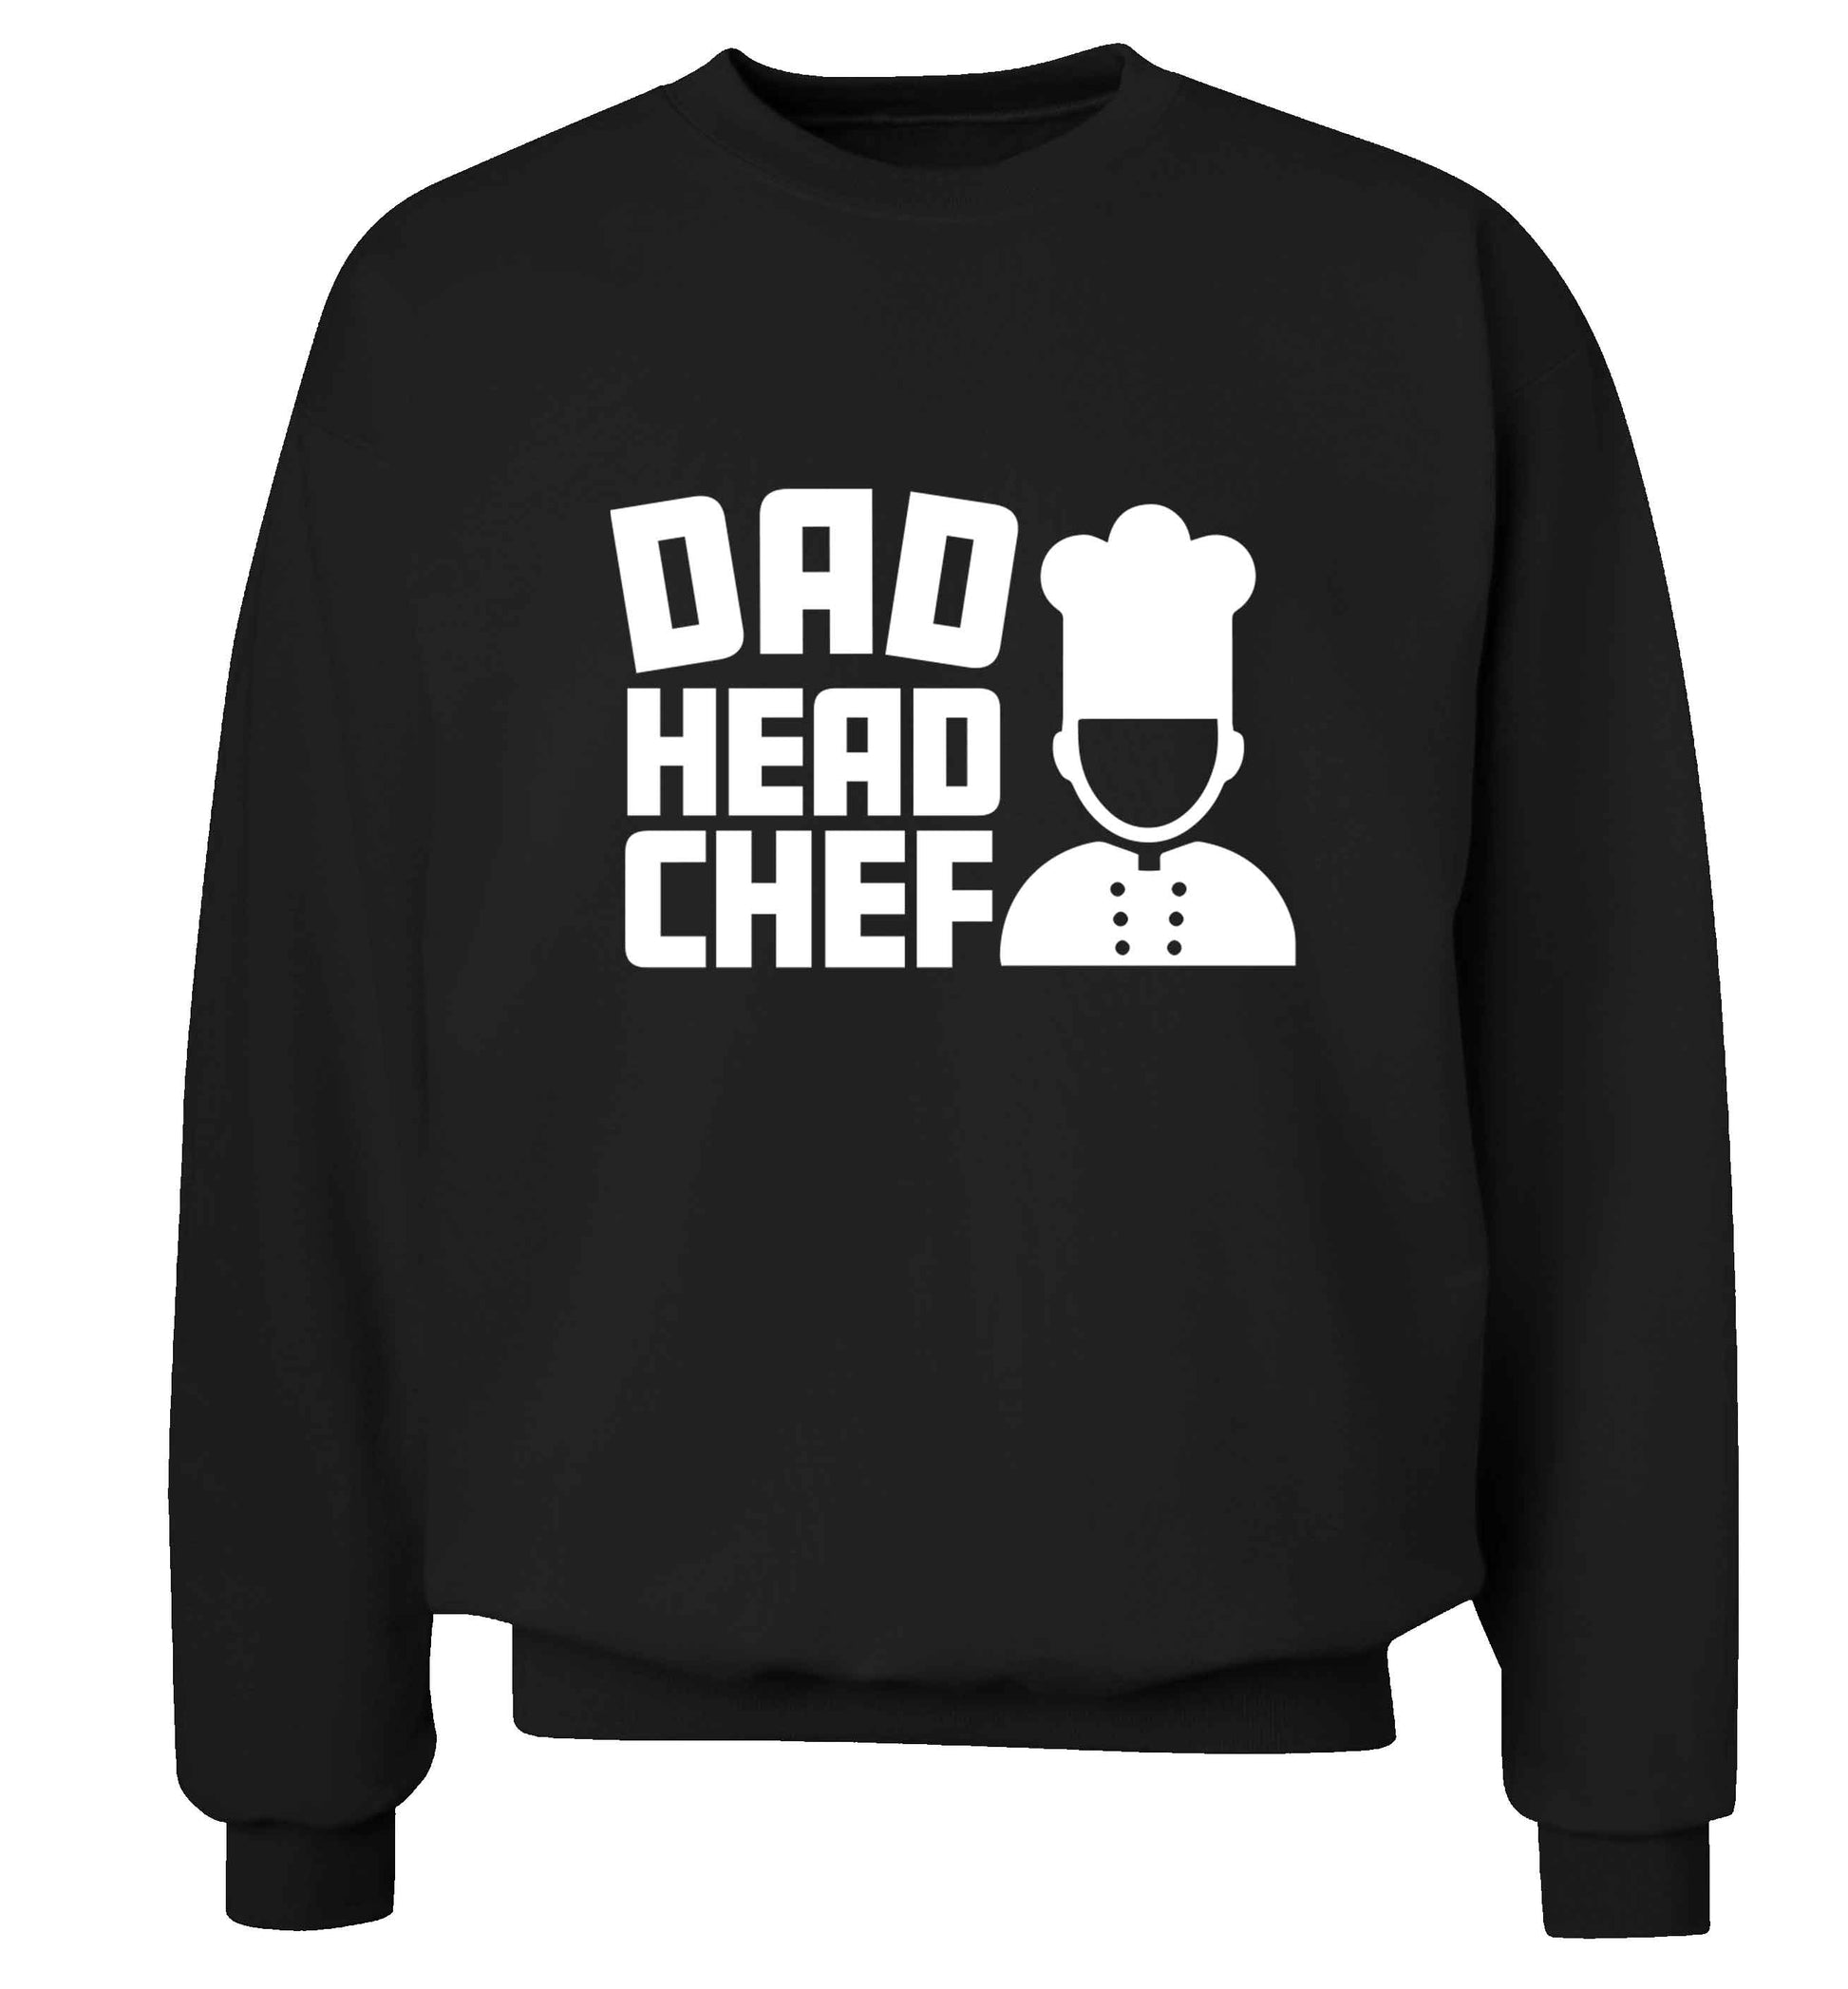 Dad head chef adult's unisex black sweater 2XL